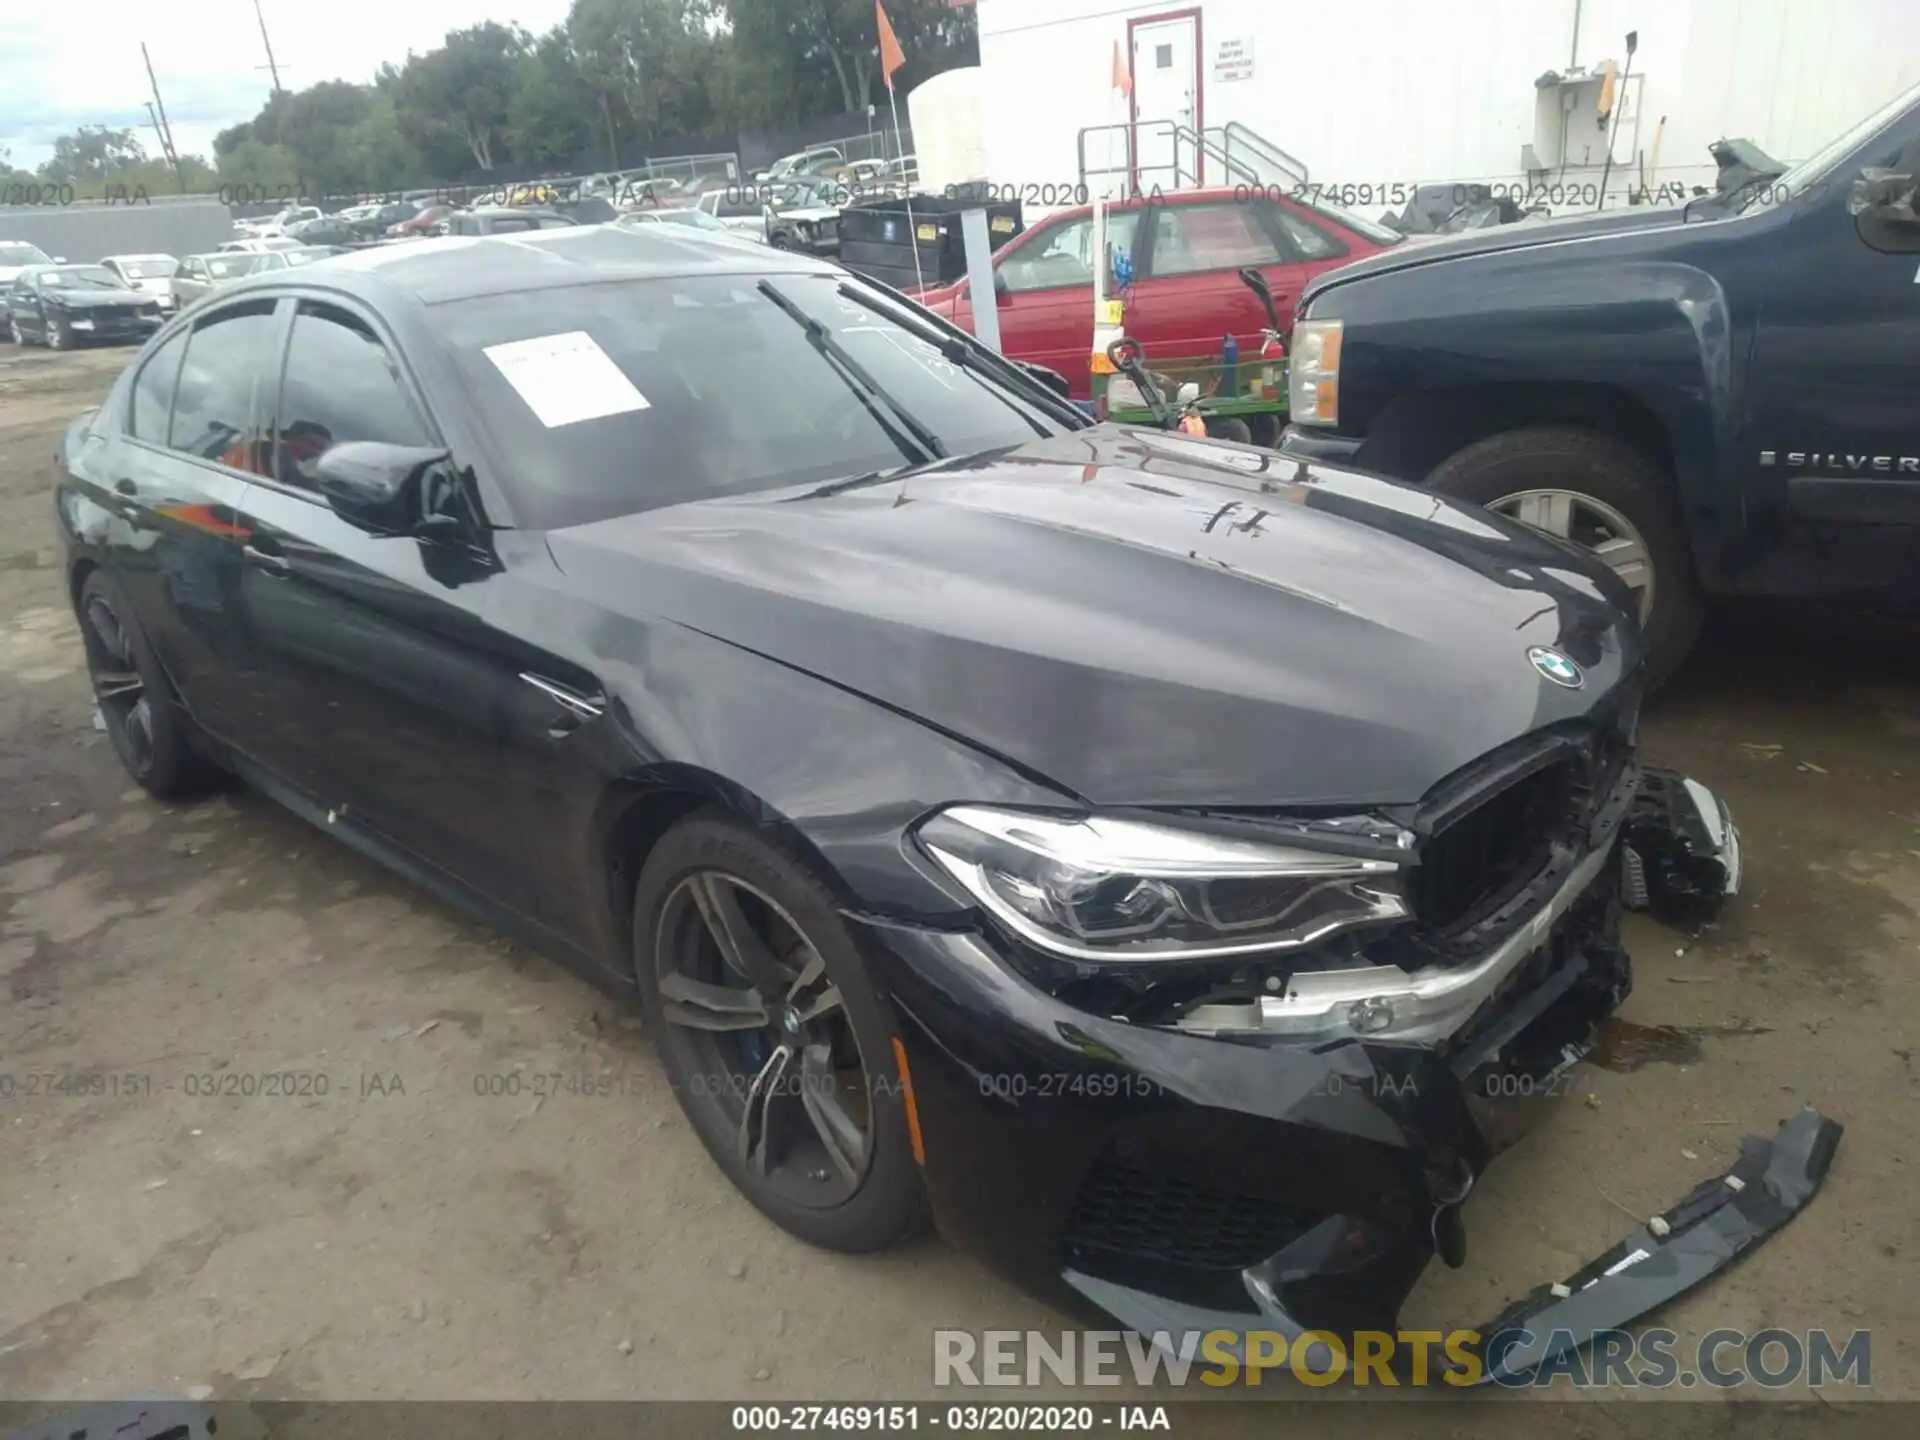 1 Фотография поврежденного автомобиля WBSJF0C56KB448379 BMW M5 2019